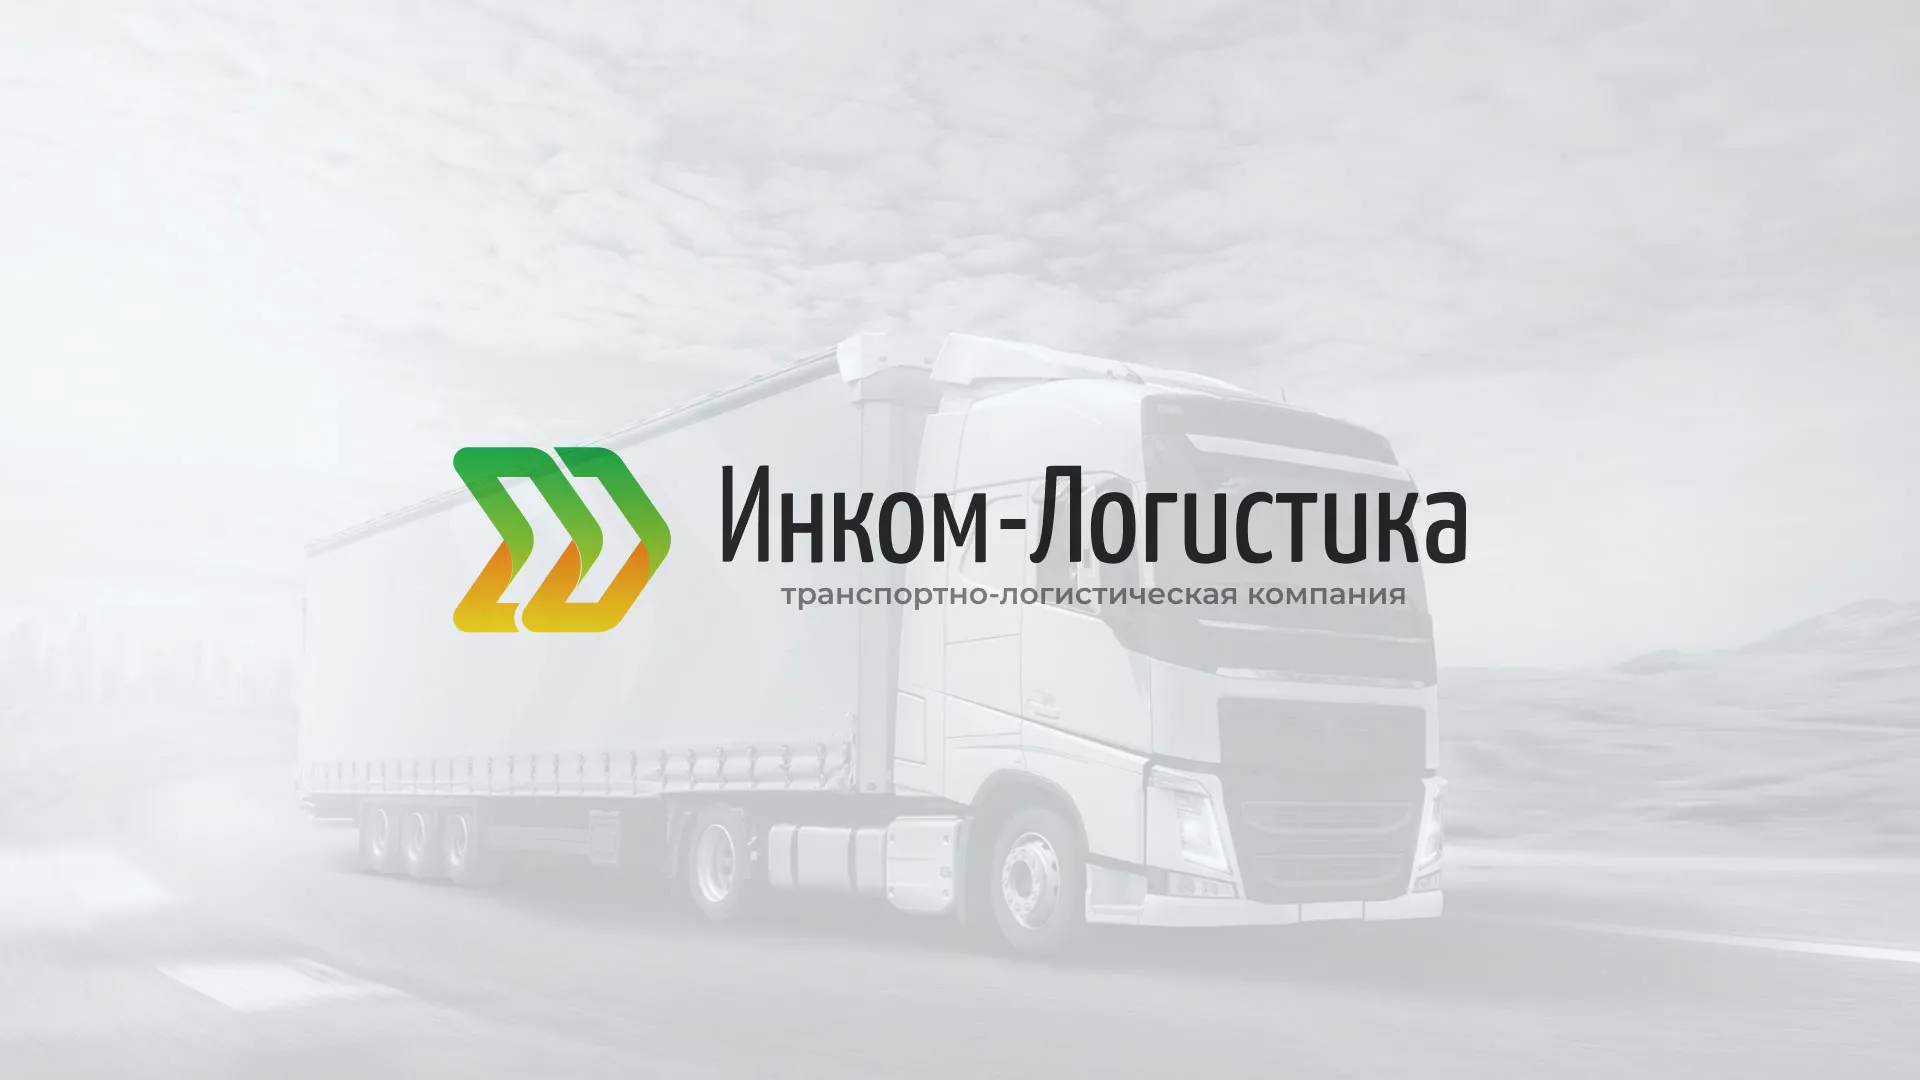 Разработка логотипа и сайта компании «Инком-Логистика» в Выксе